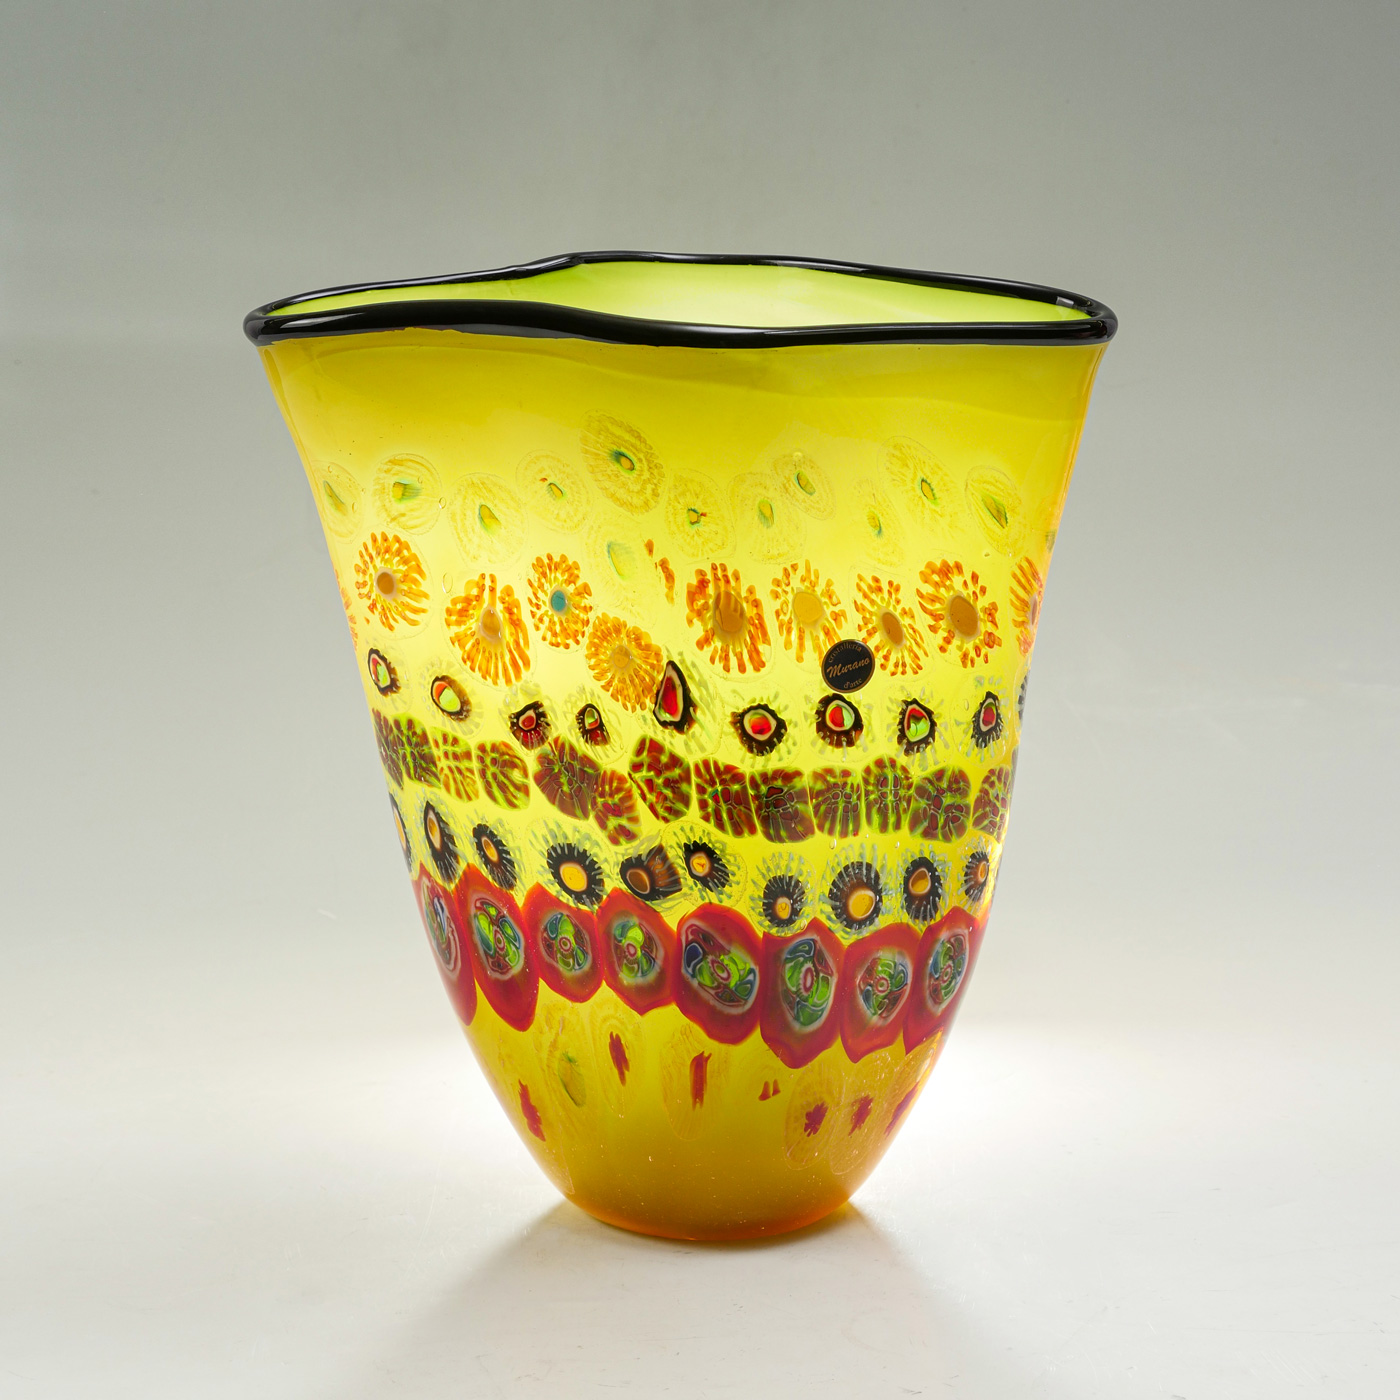 LARGE MURANO ART GLASS VASE: Tall